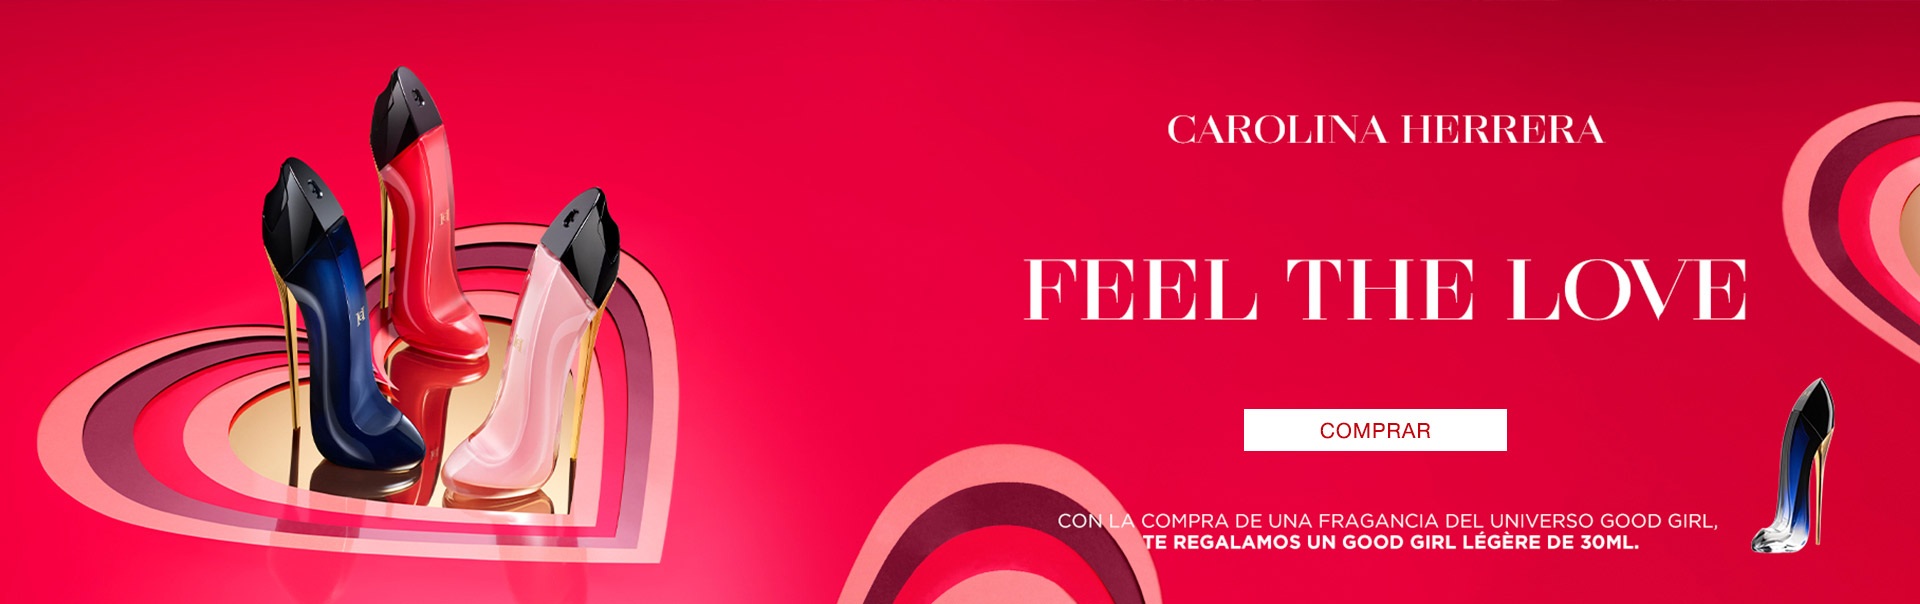 Carolina Herrera - Feel the Love